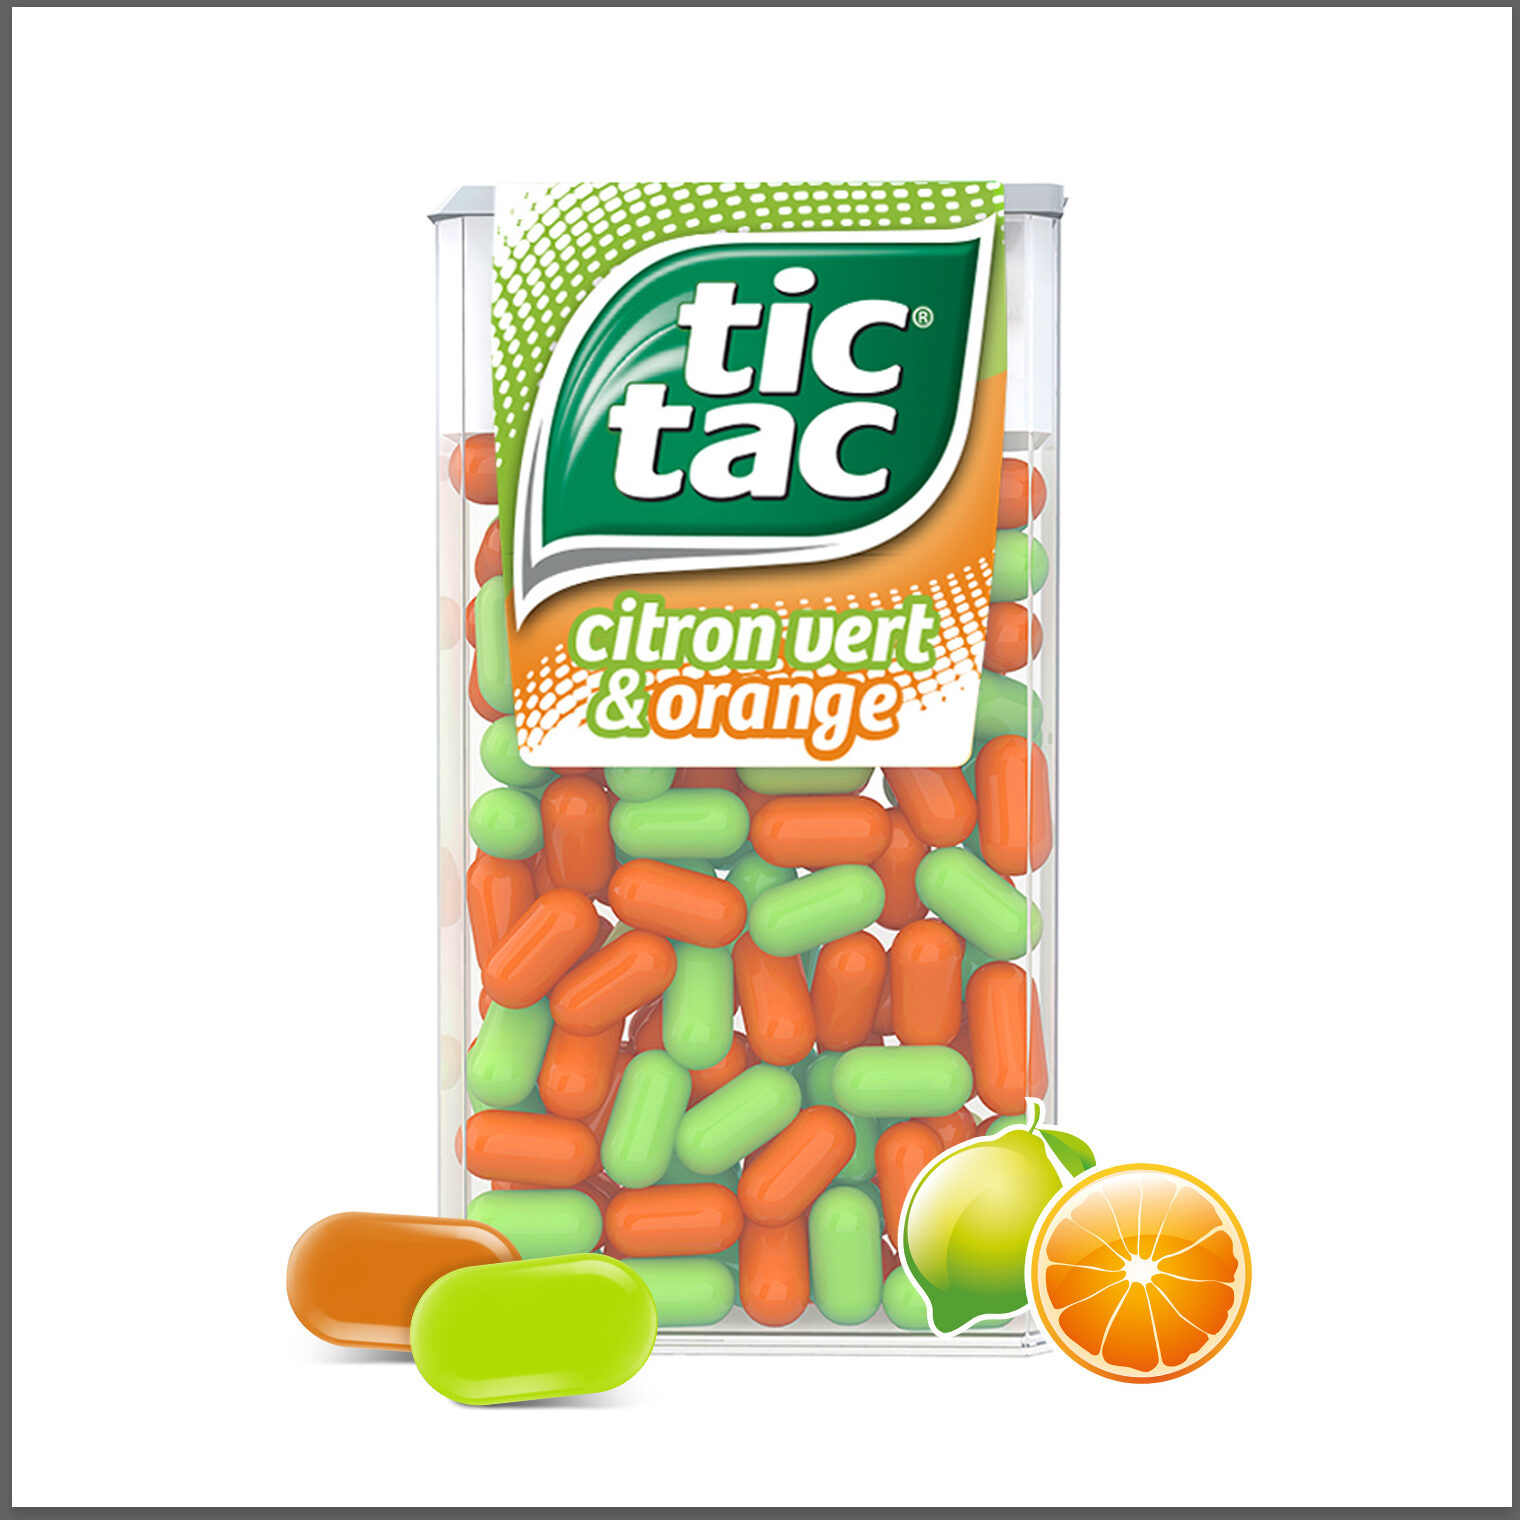 TicTac citron vert et orange - Produkt - en